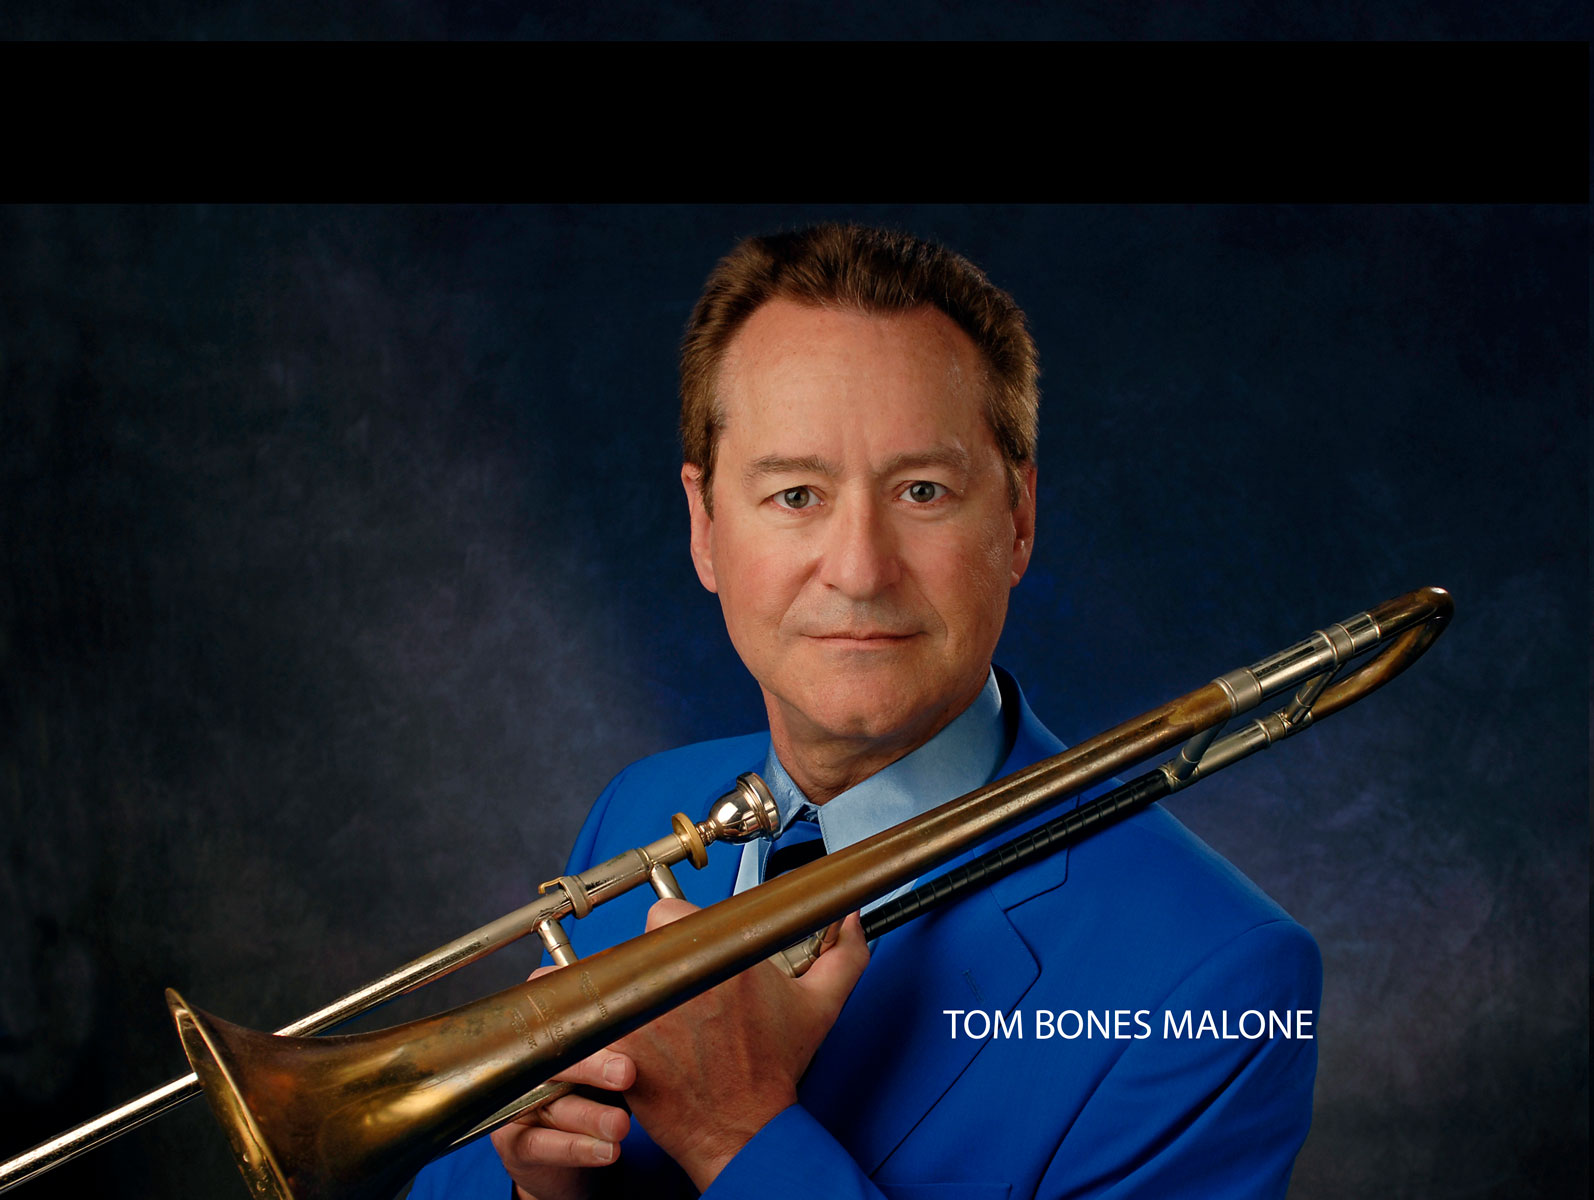 Tom "Bones" Malone, trombonist